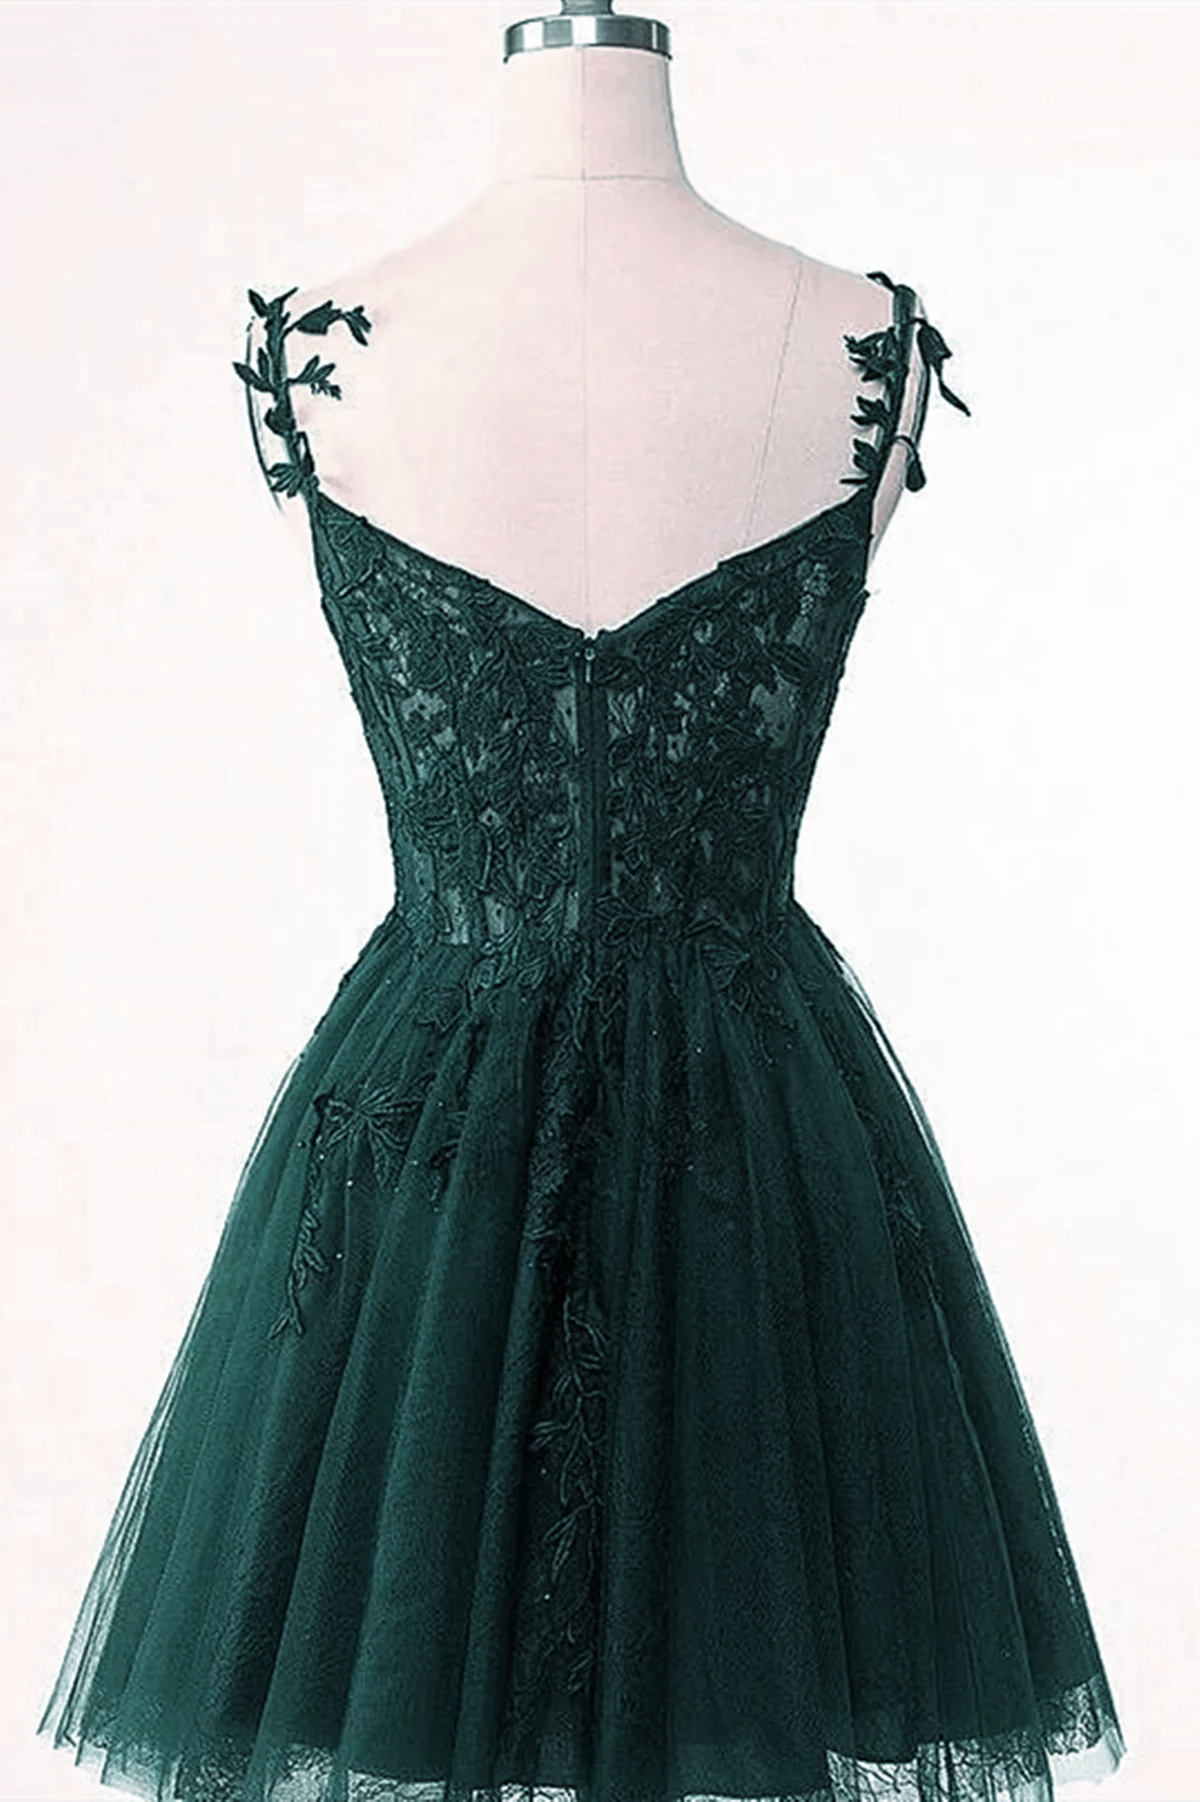 Prom Dresses Glitter, V-Neckline Dark Green Tulle With Lace Short Homecoming Dress, Green Short Prom Dress